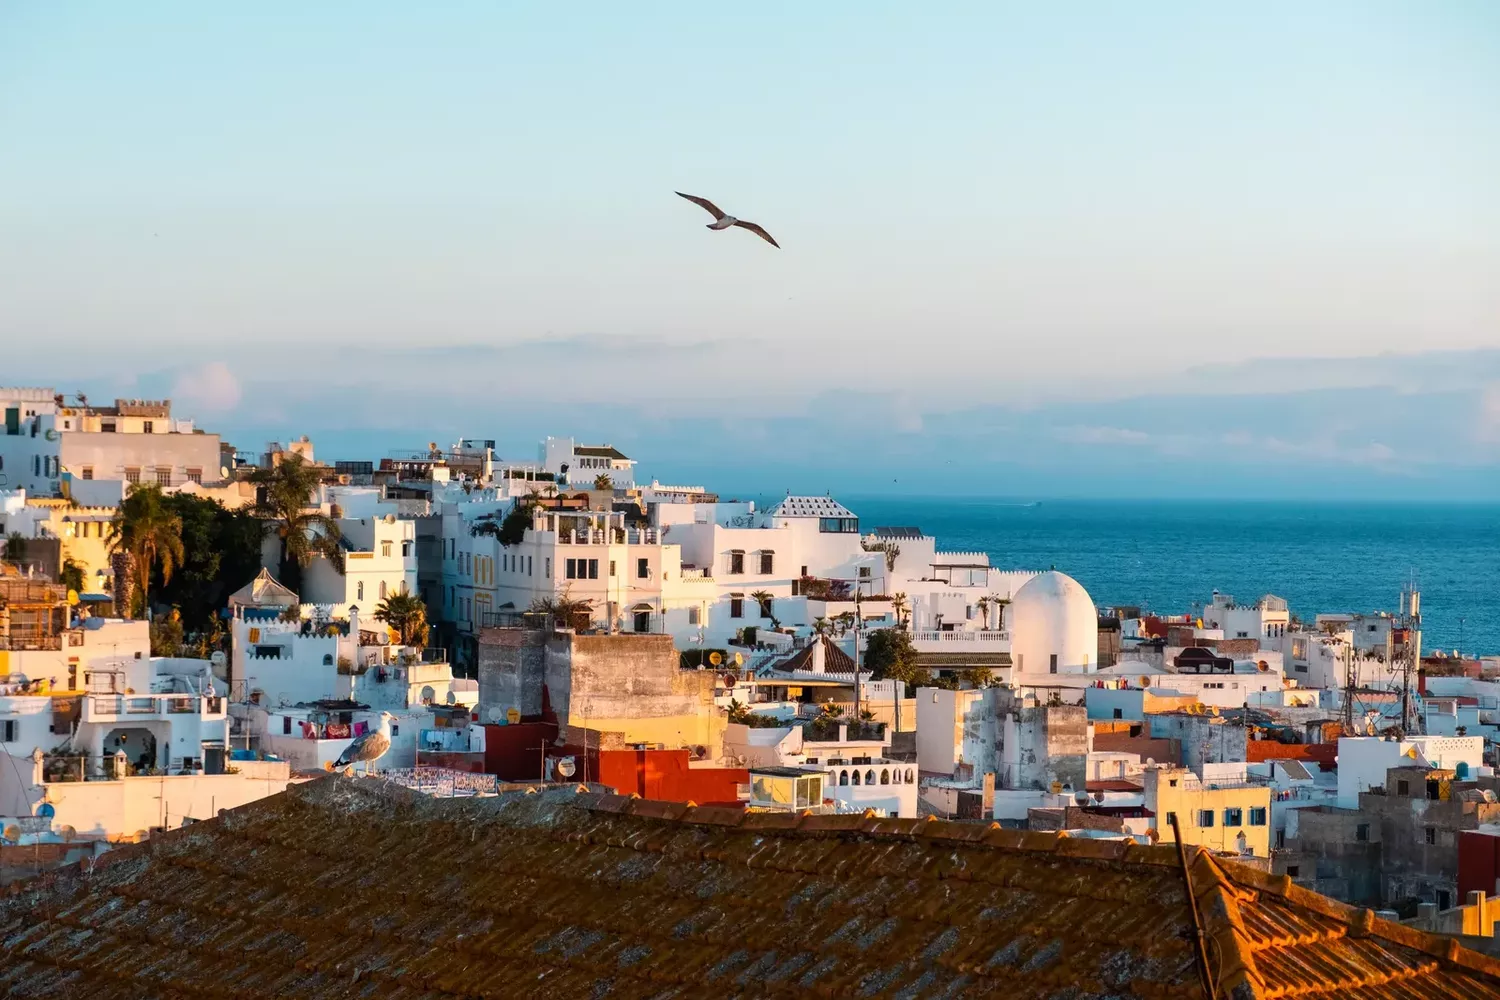 Tangiers, Morocco